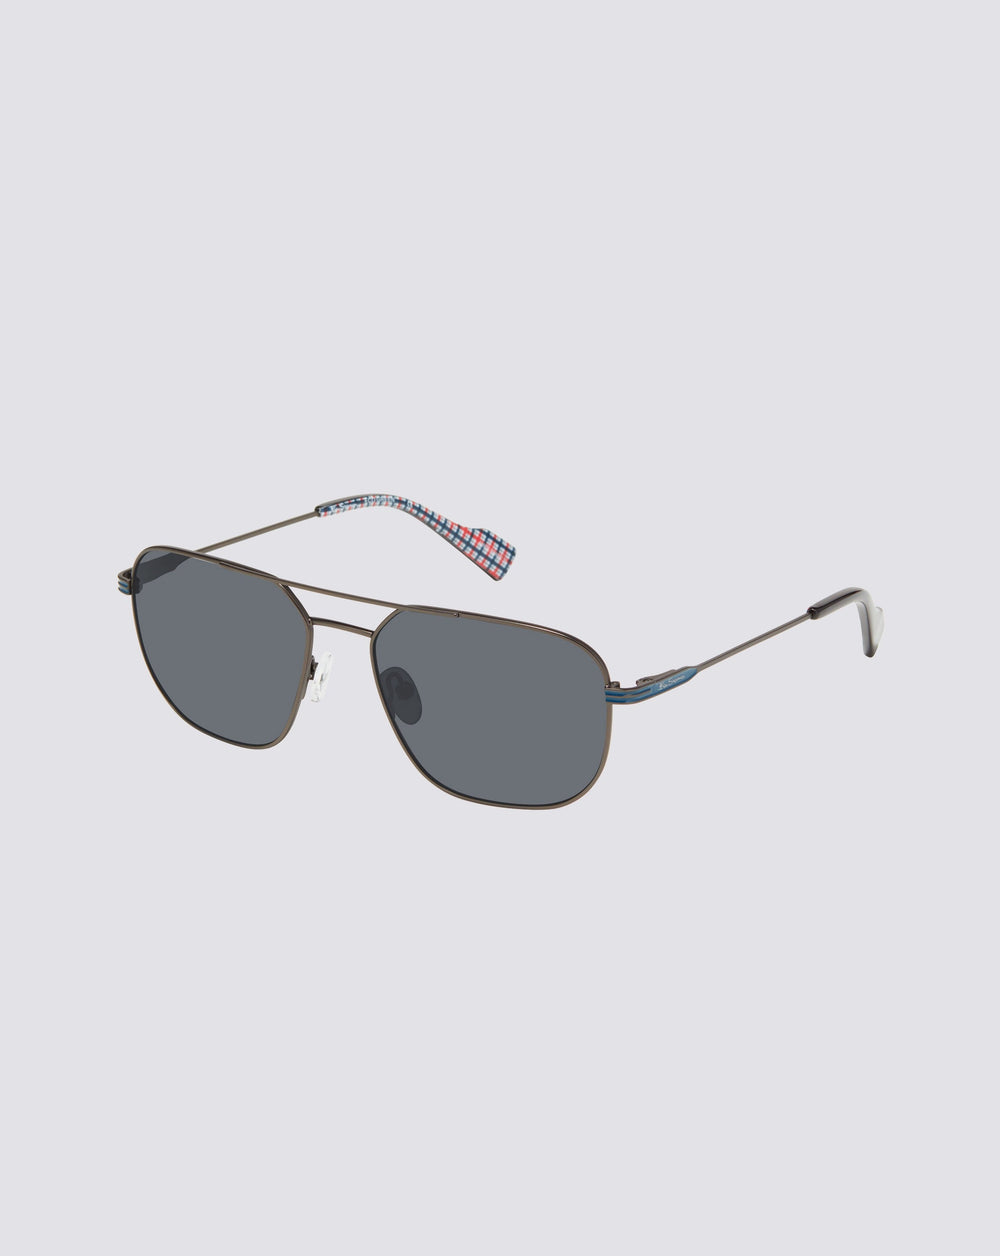 St. Johns Polarized Square Eco Sunglasses - Dark Grey